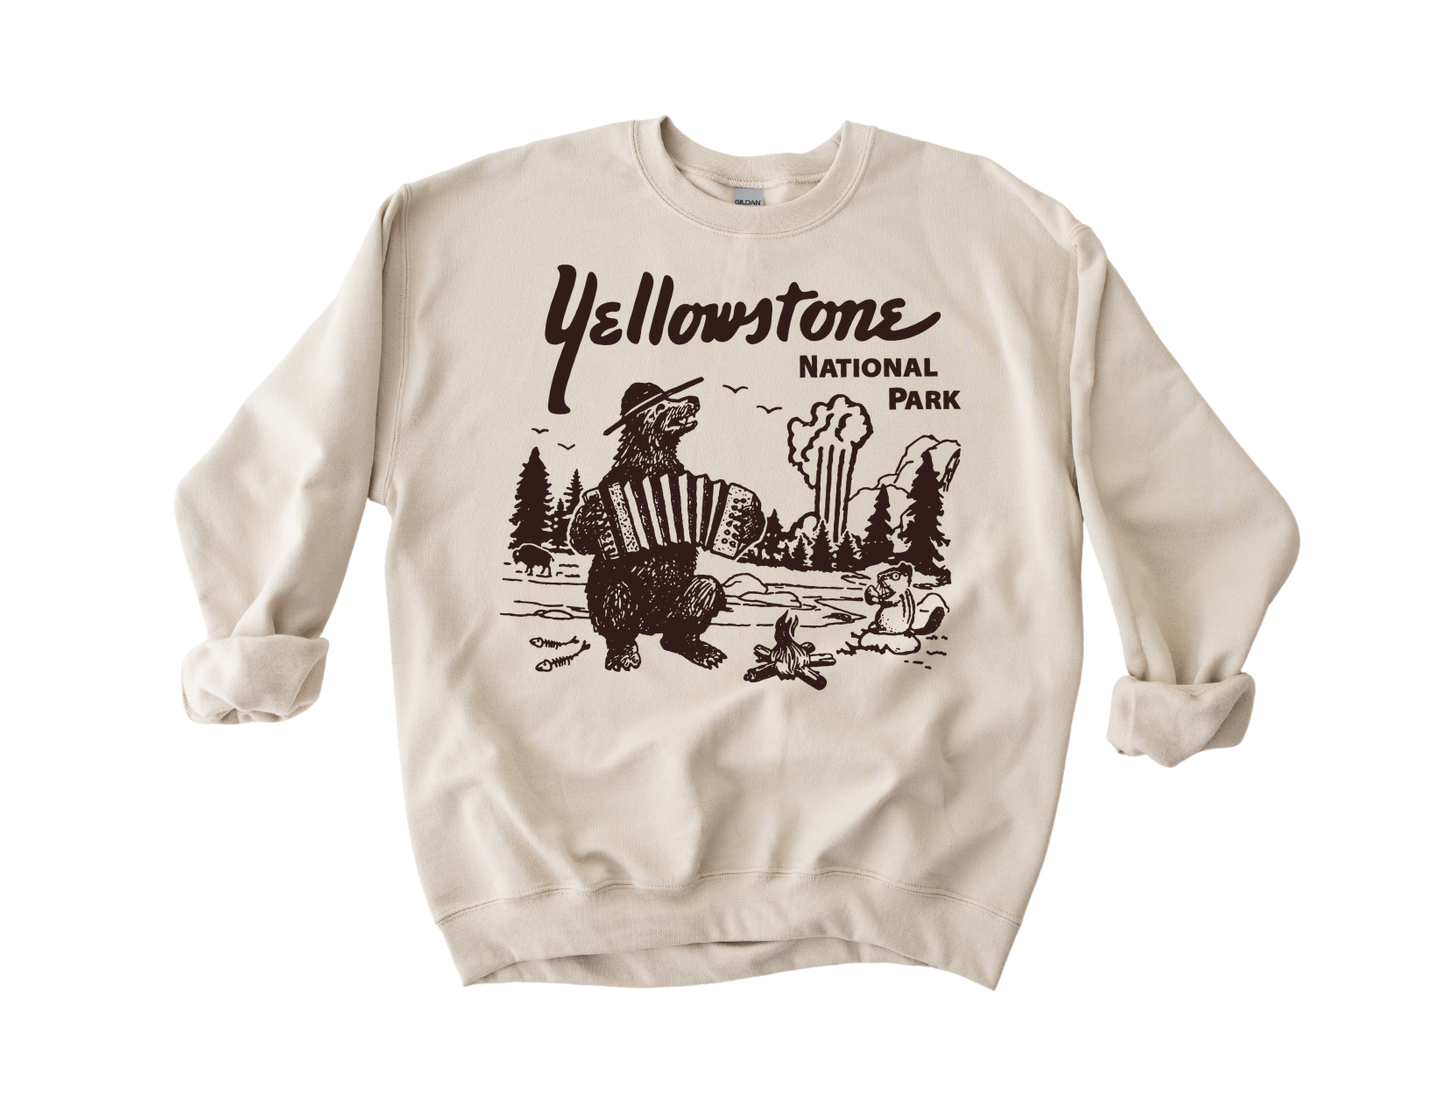 Yellowstone National Park Unisex Sweatshirt